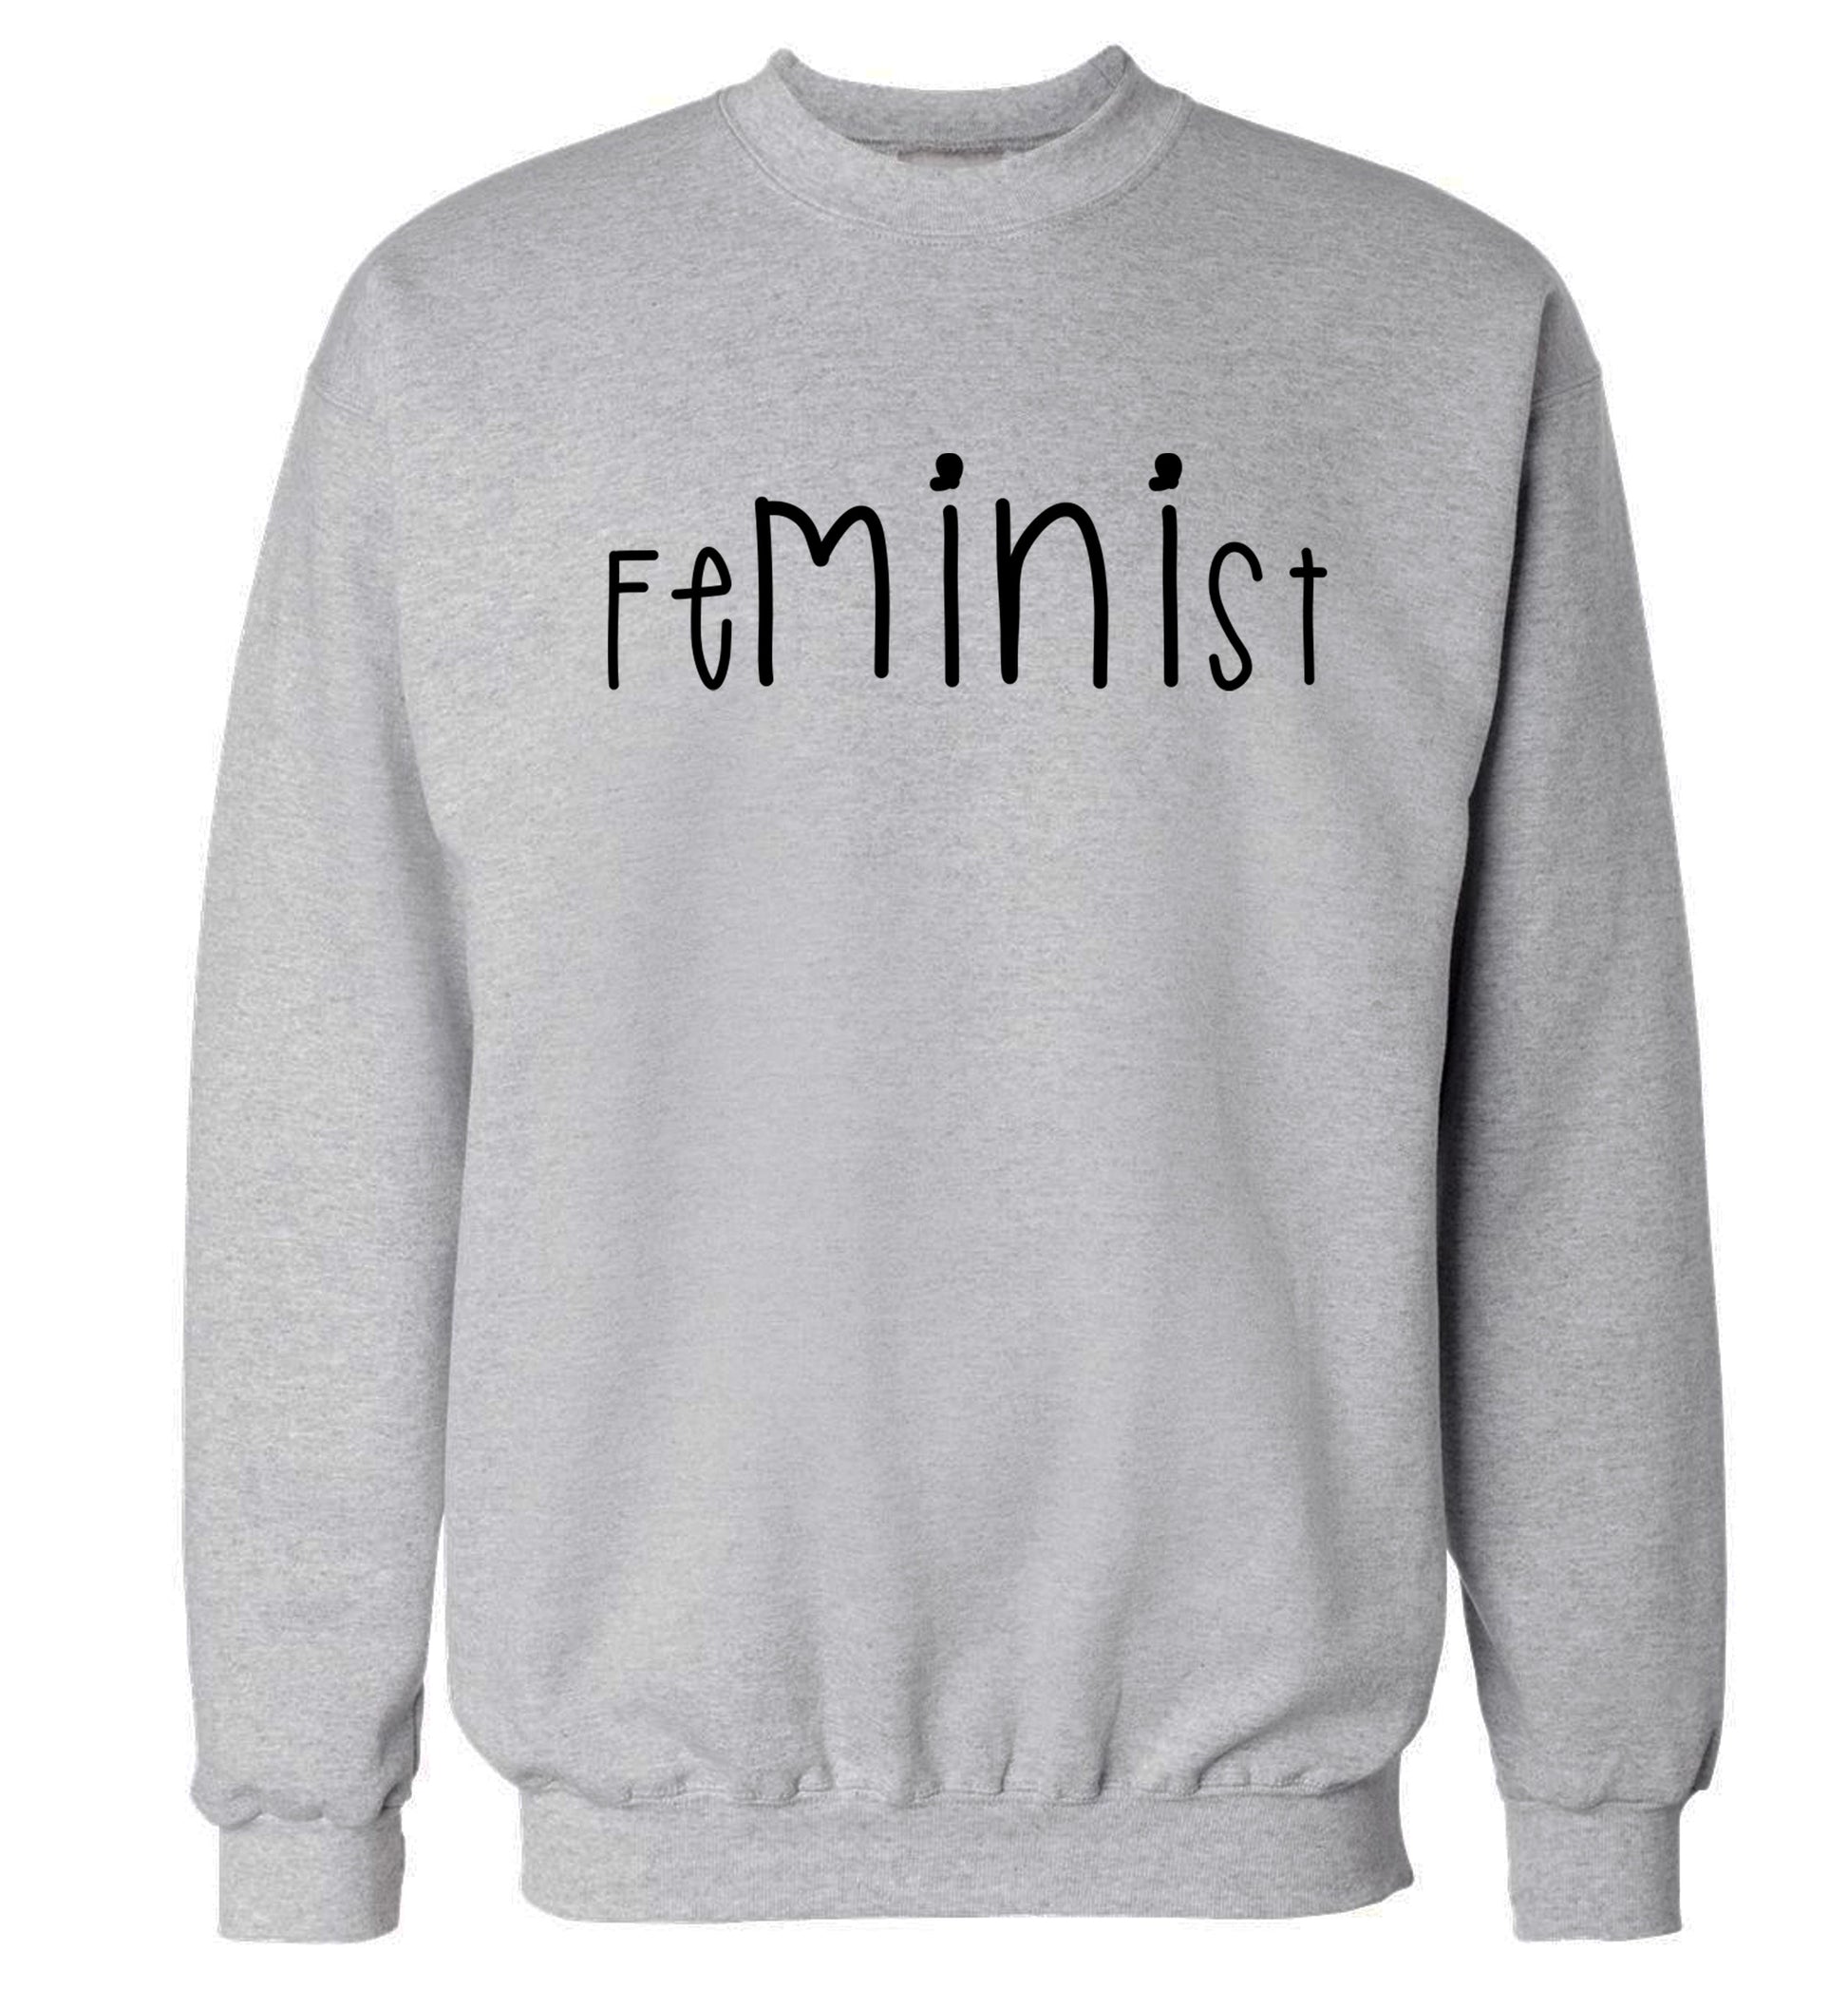 FeMINIst Adult's unisex grey Sweater 2XL